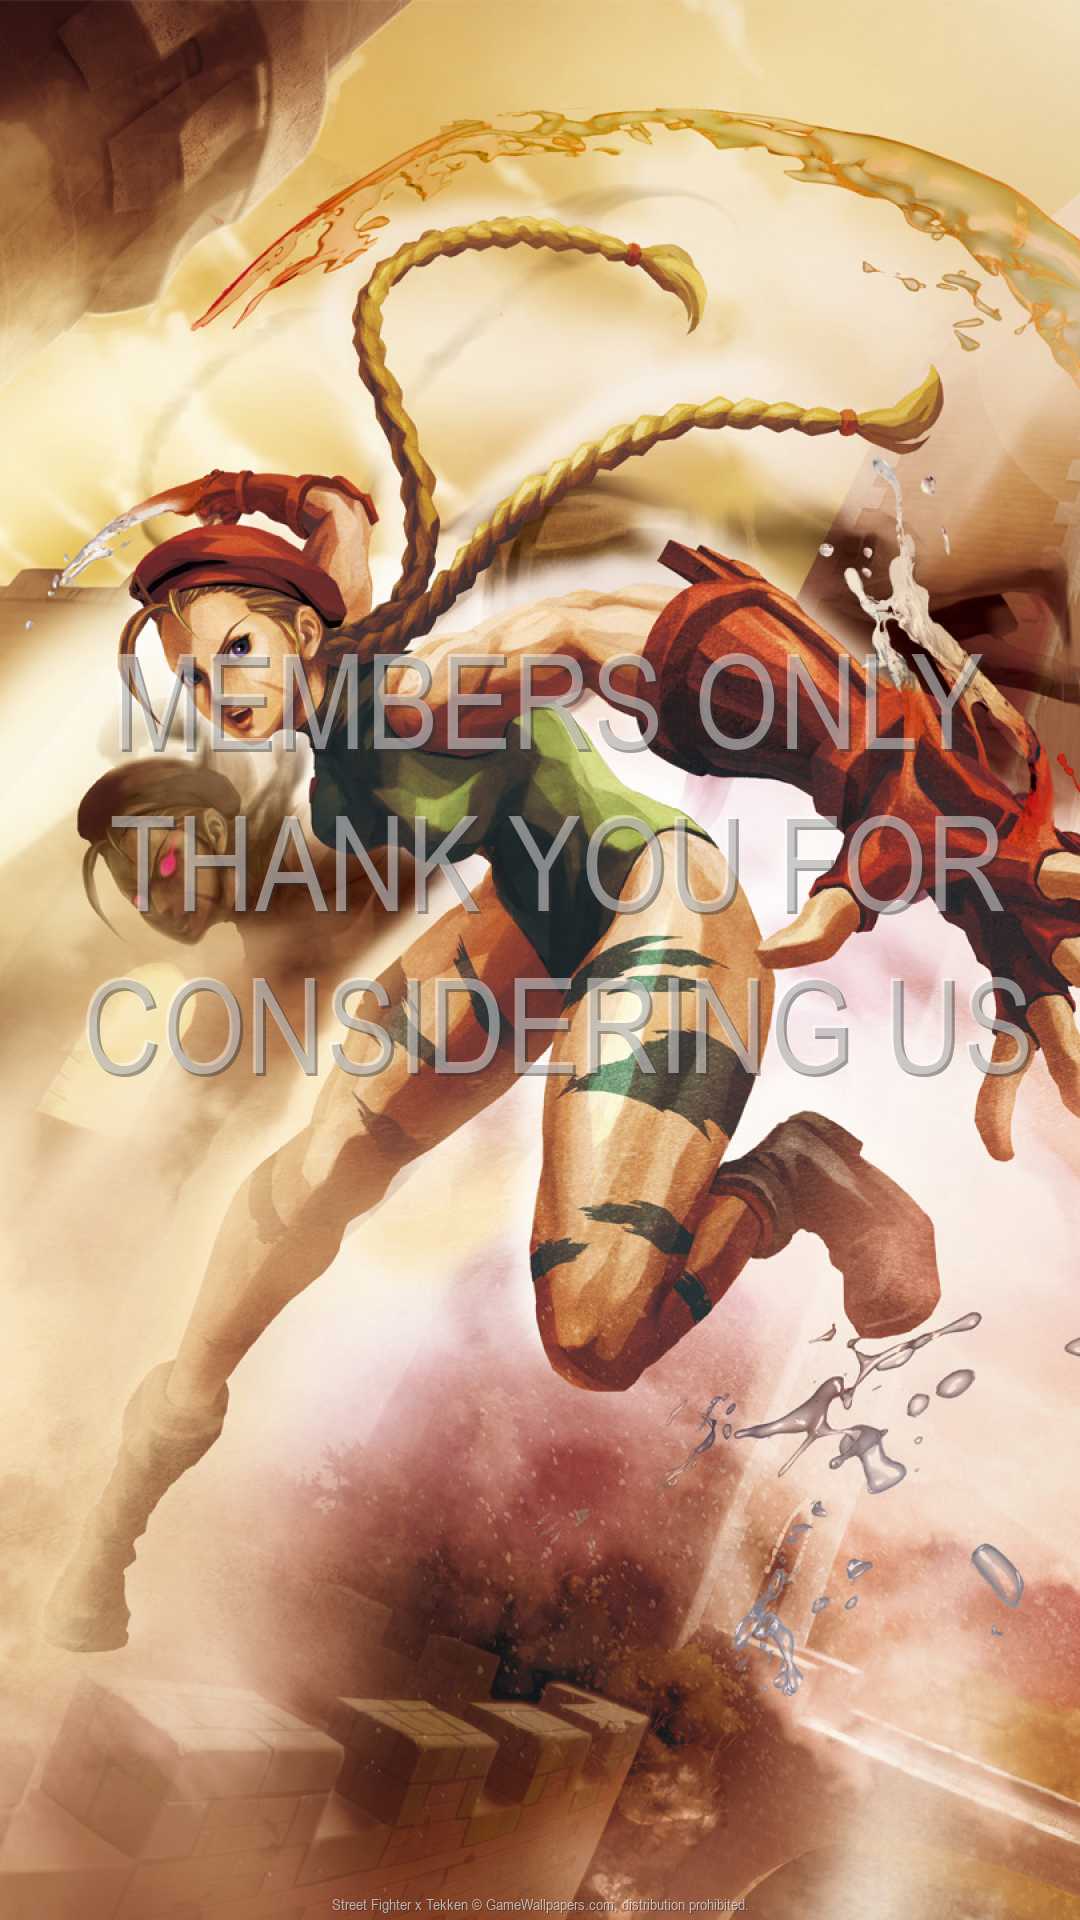 Street Fighter x Tekken 1080p%20Vertical Mobile wallpaper or background 01